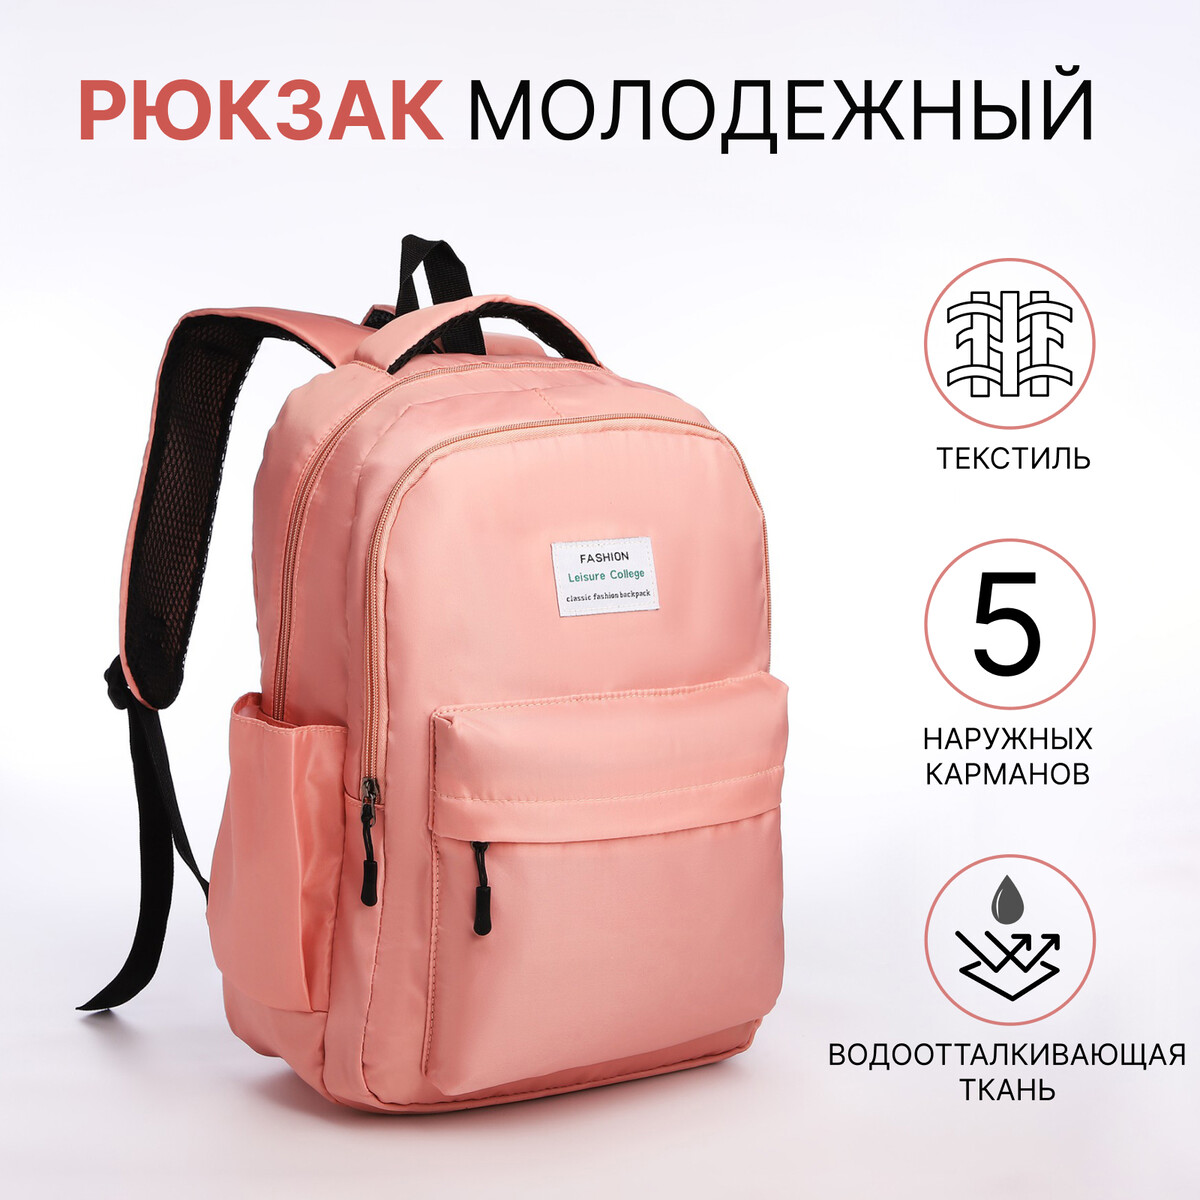 Рюкзак молодежный из текстиля на молнии, 5 карманов, цвет розовый рюкзак молодежный из текстиля 5 карманов синий